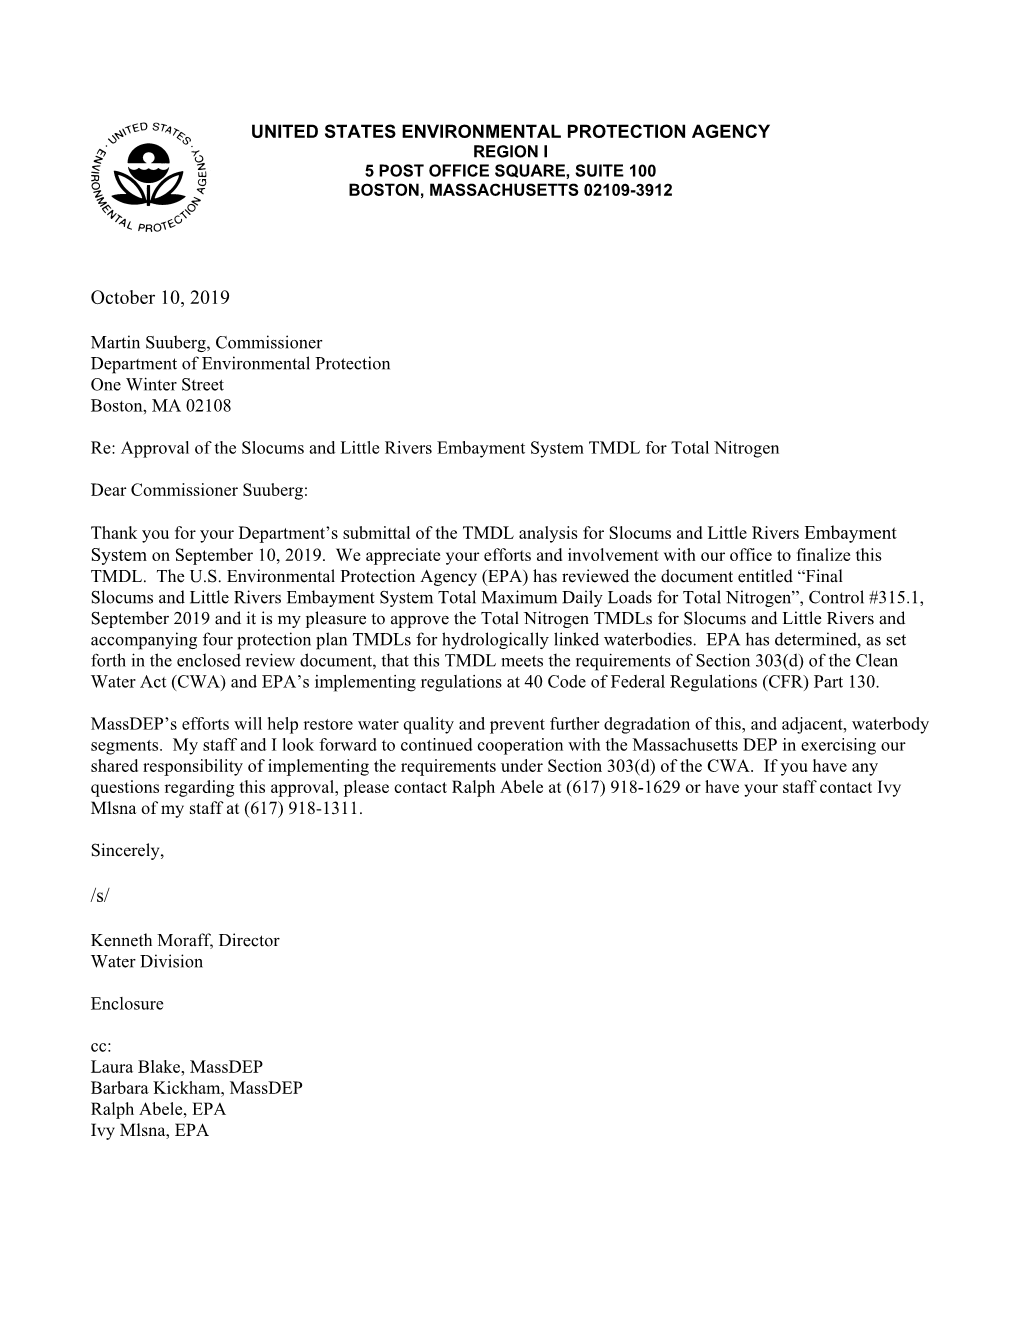 Final Slocums and Little Rivers Nitrogen TMDL Approval Letter